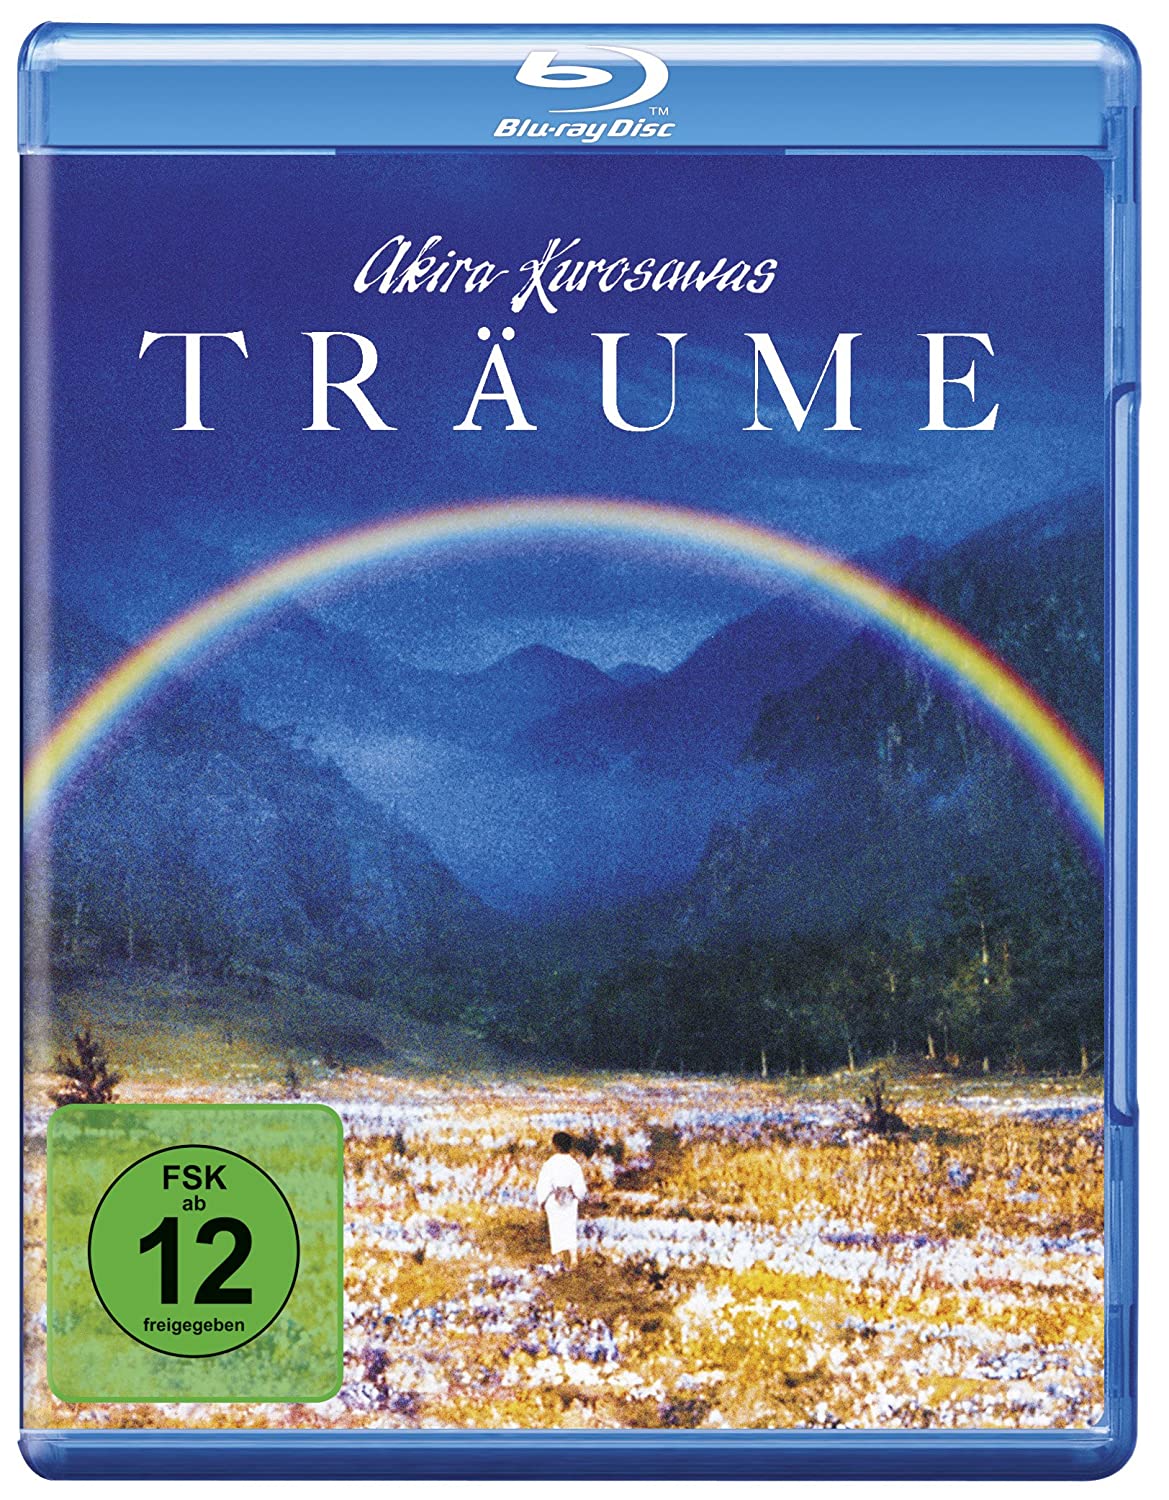 Traeume | Film-Rezensionen.de